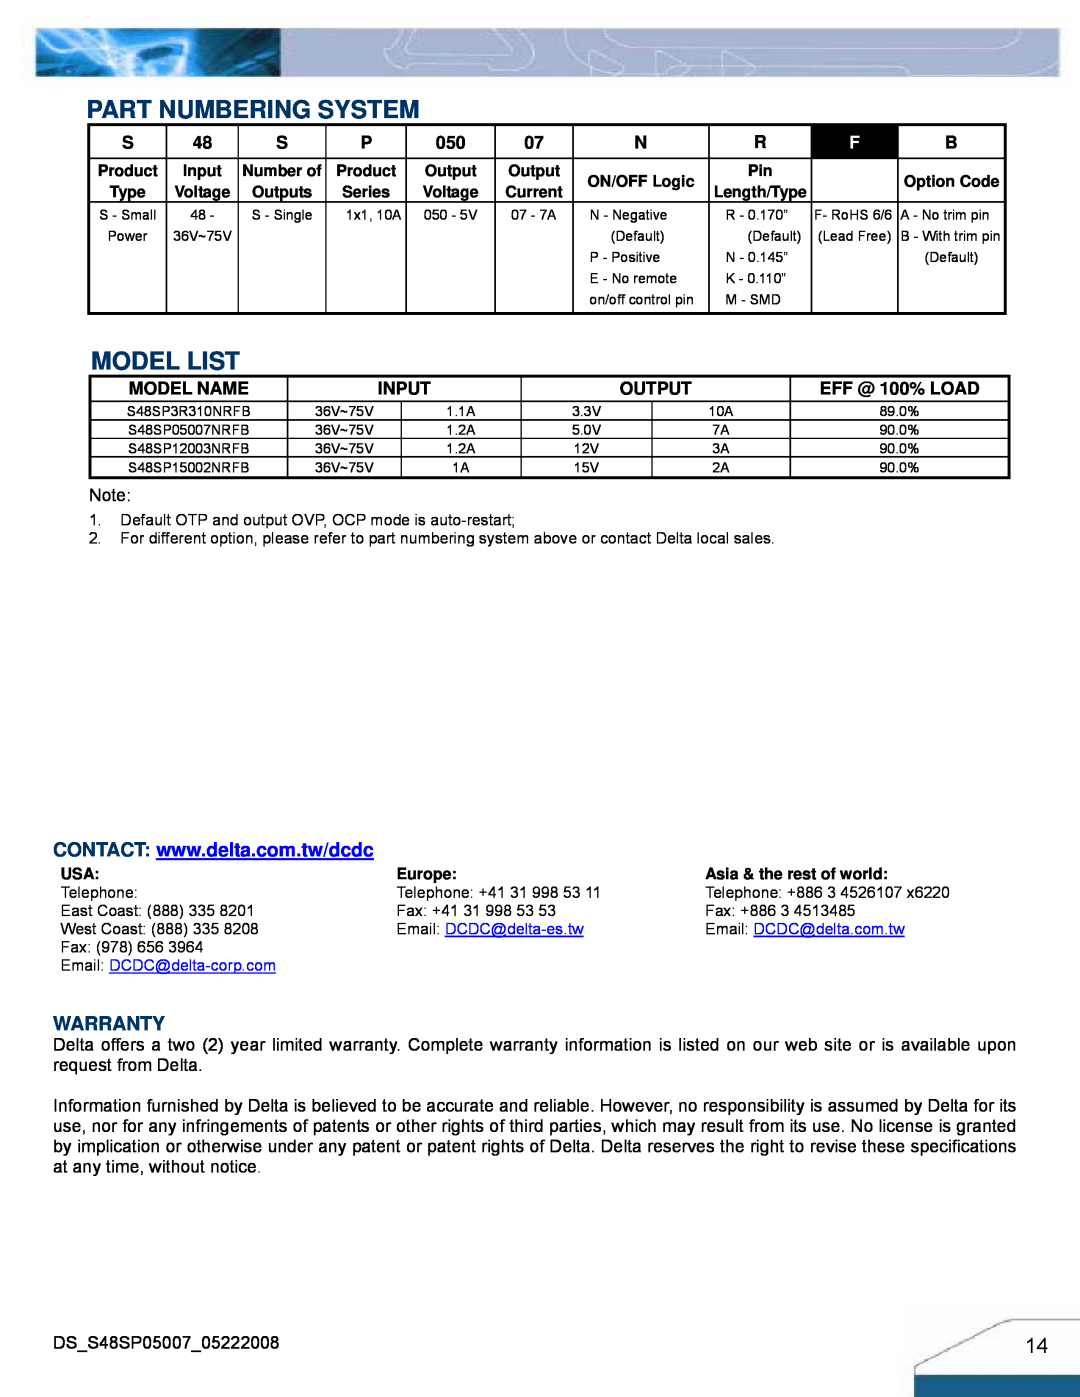 Delta Electronics S48SP manual Part Numbering System, Model List, Warranty, Model Name, Input, Output, EFF @ 100% LOAD 